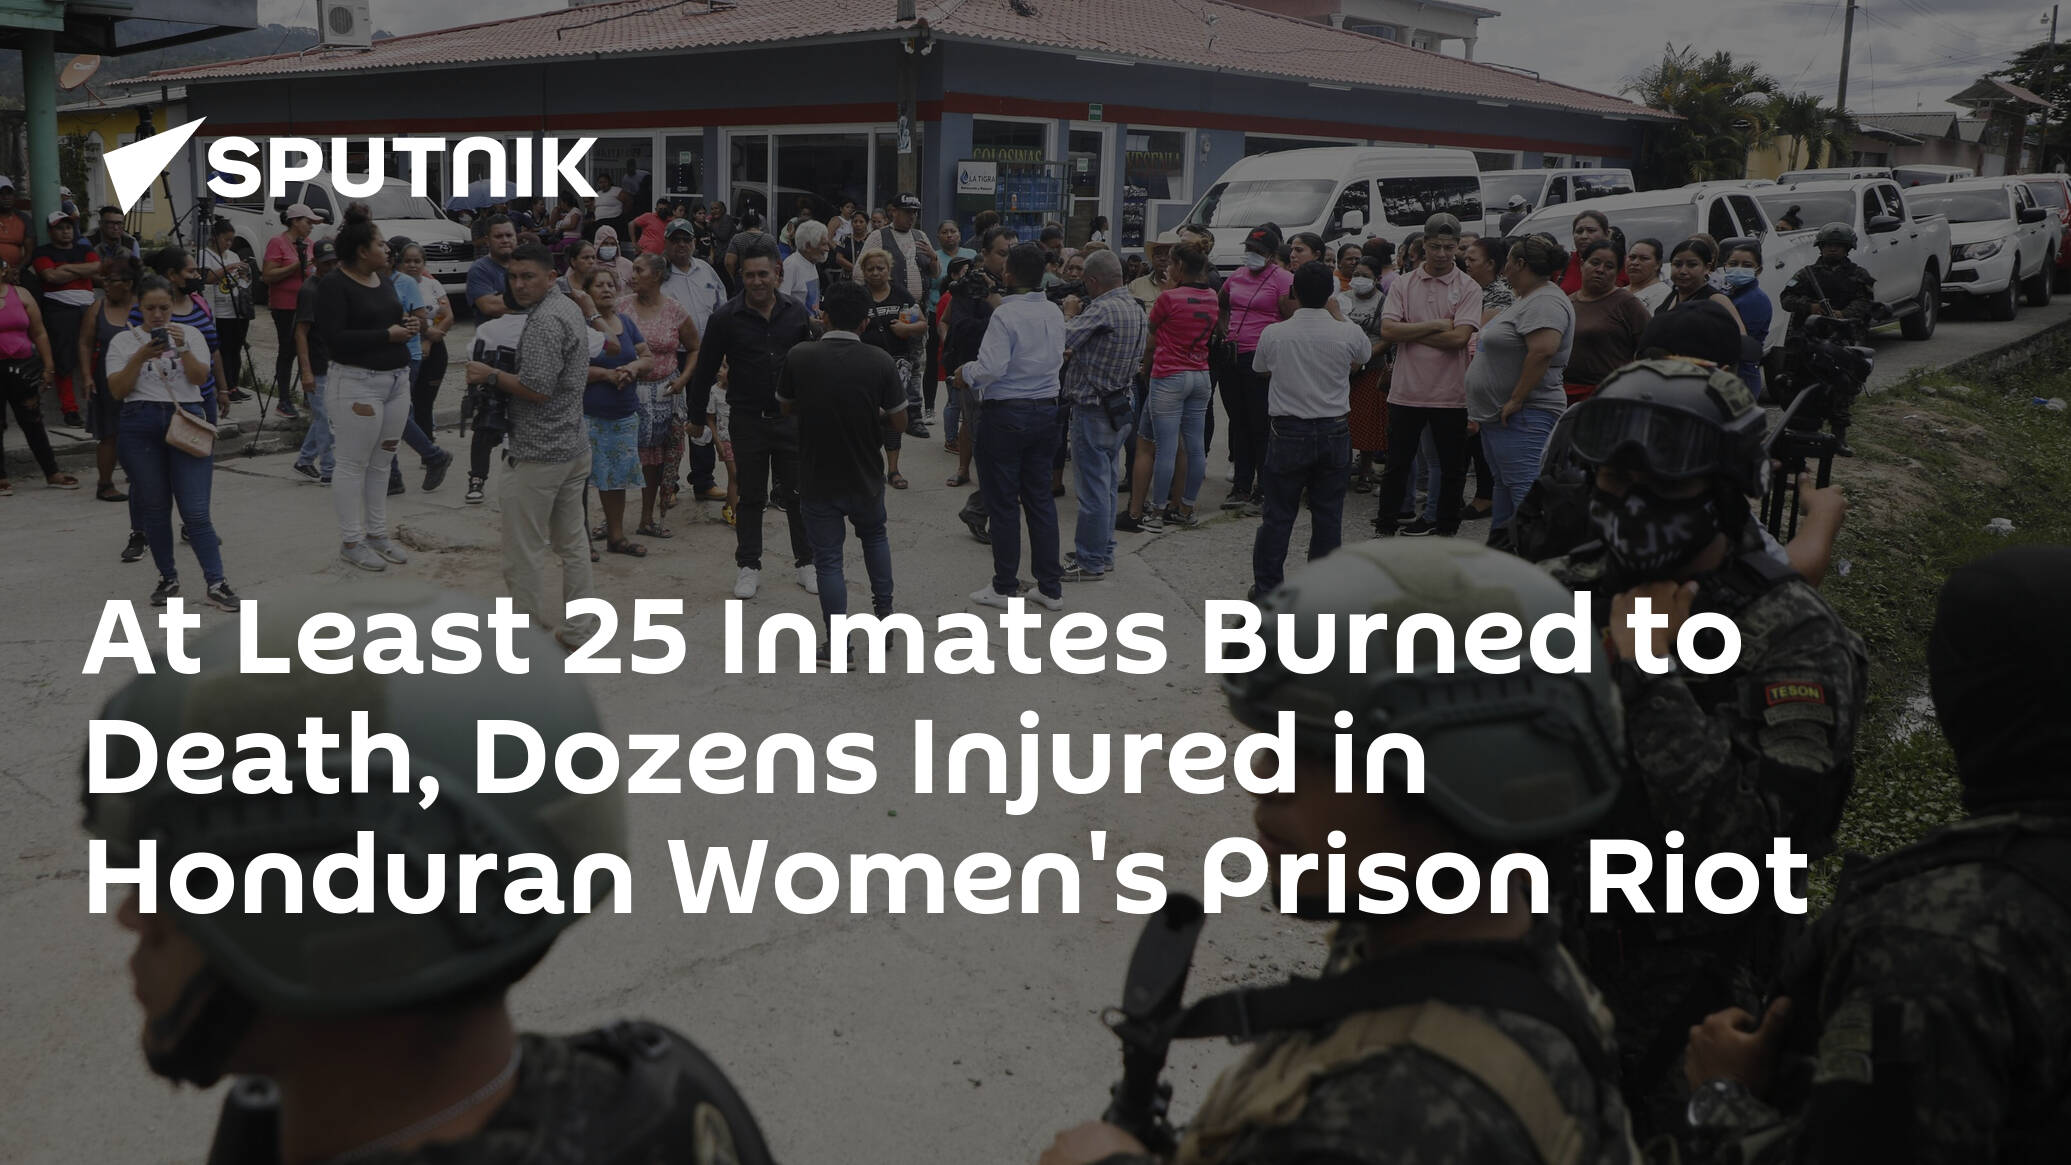 At Least 25 Inmates Burned to Death, Dozens Injured in Honduran Women's Prison Riot